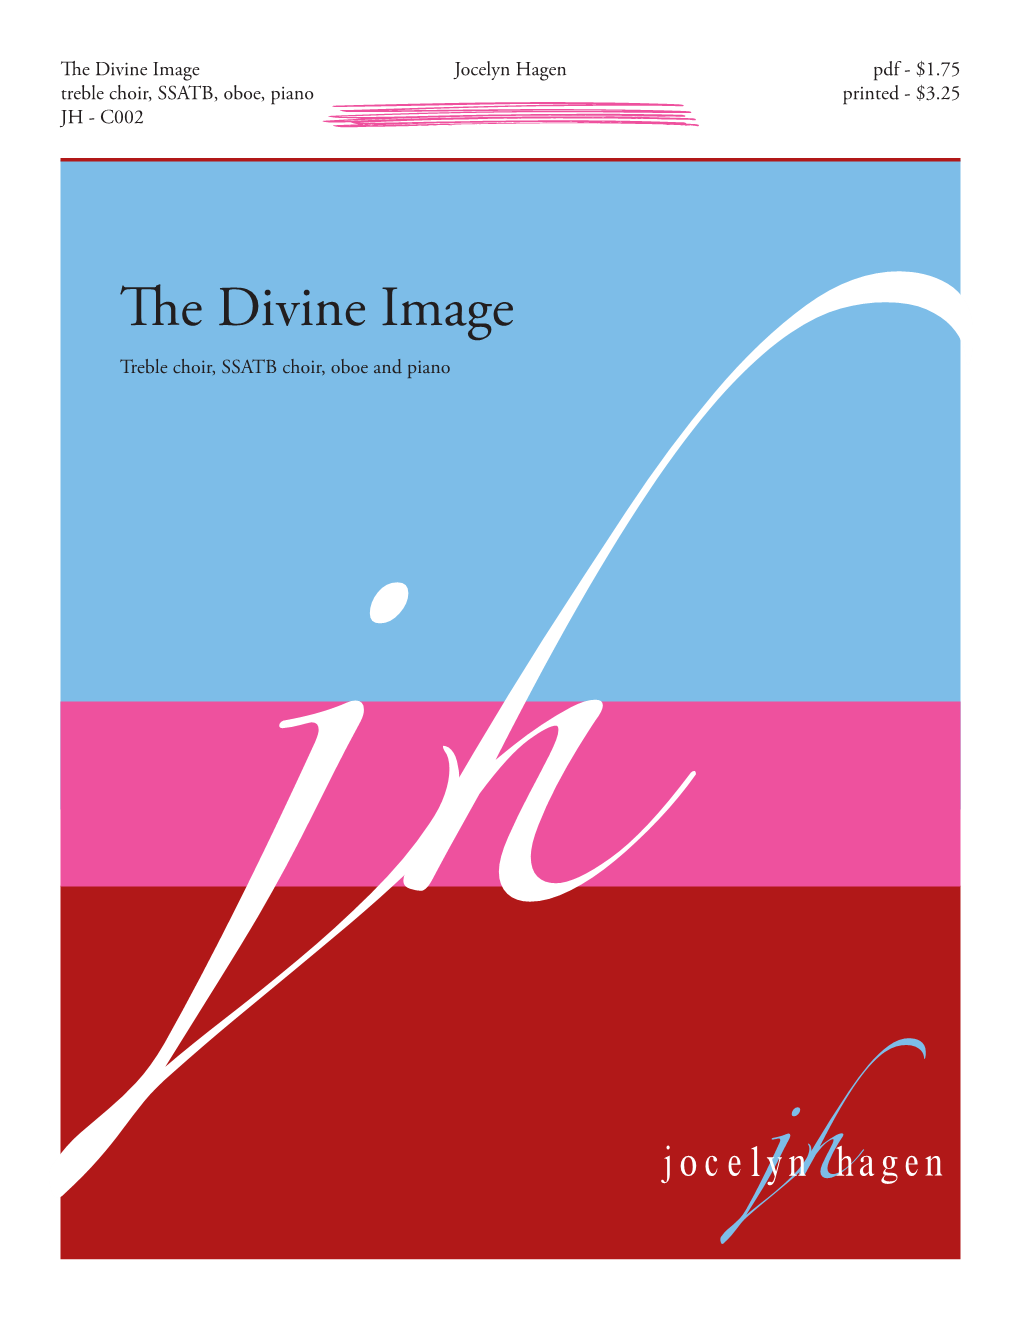 The Divine Image Jocelyn Hagen Pdf - $1.75 Treble Choir, SSATB, Oboe, Piano Printed - $3.25 JH - C002